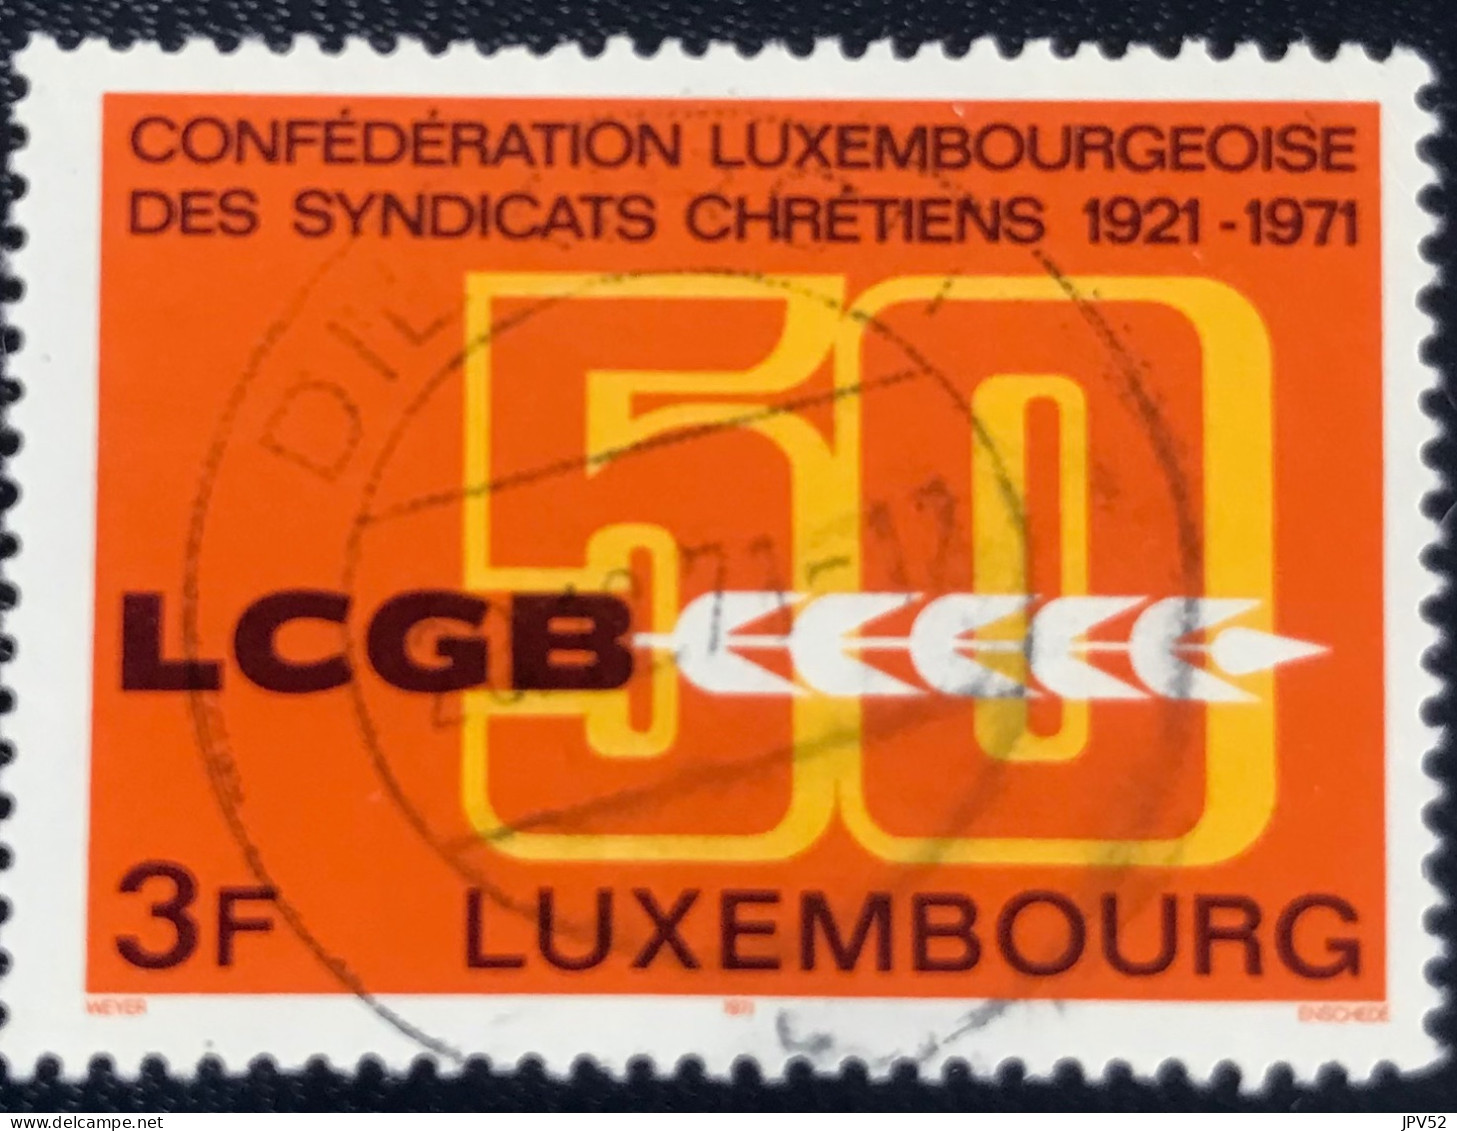 Luxembourg - Luxemburg - C18/31 - 1971 - (°)used - Michel 827 - LCGB Embleem - Gebruikt